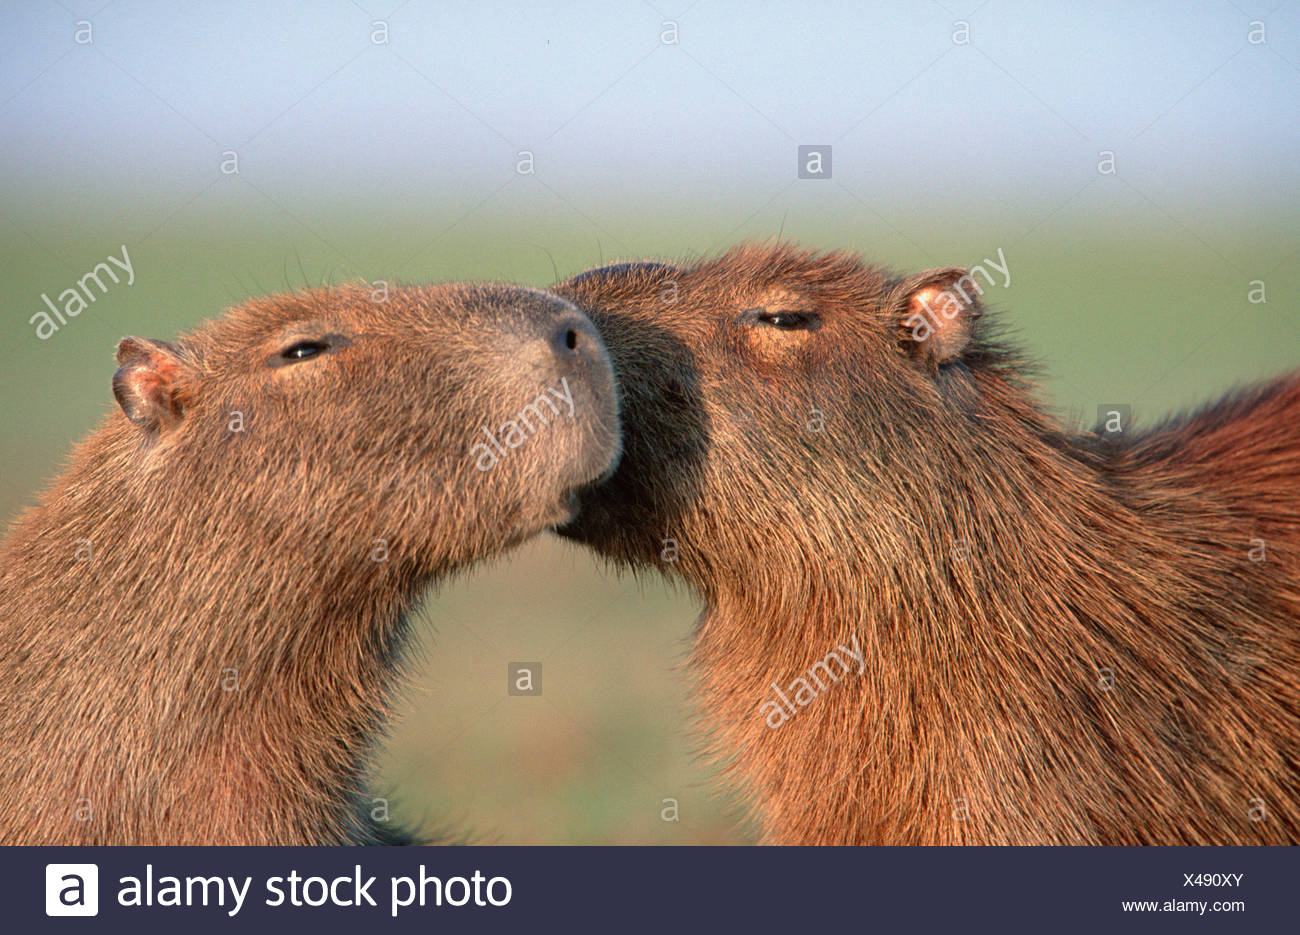 Carpincho Capybara Stockfotografie Alamy